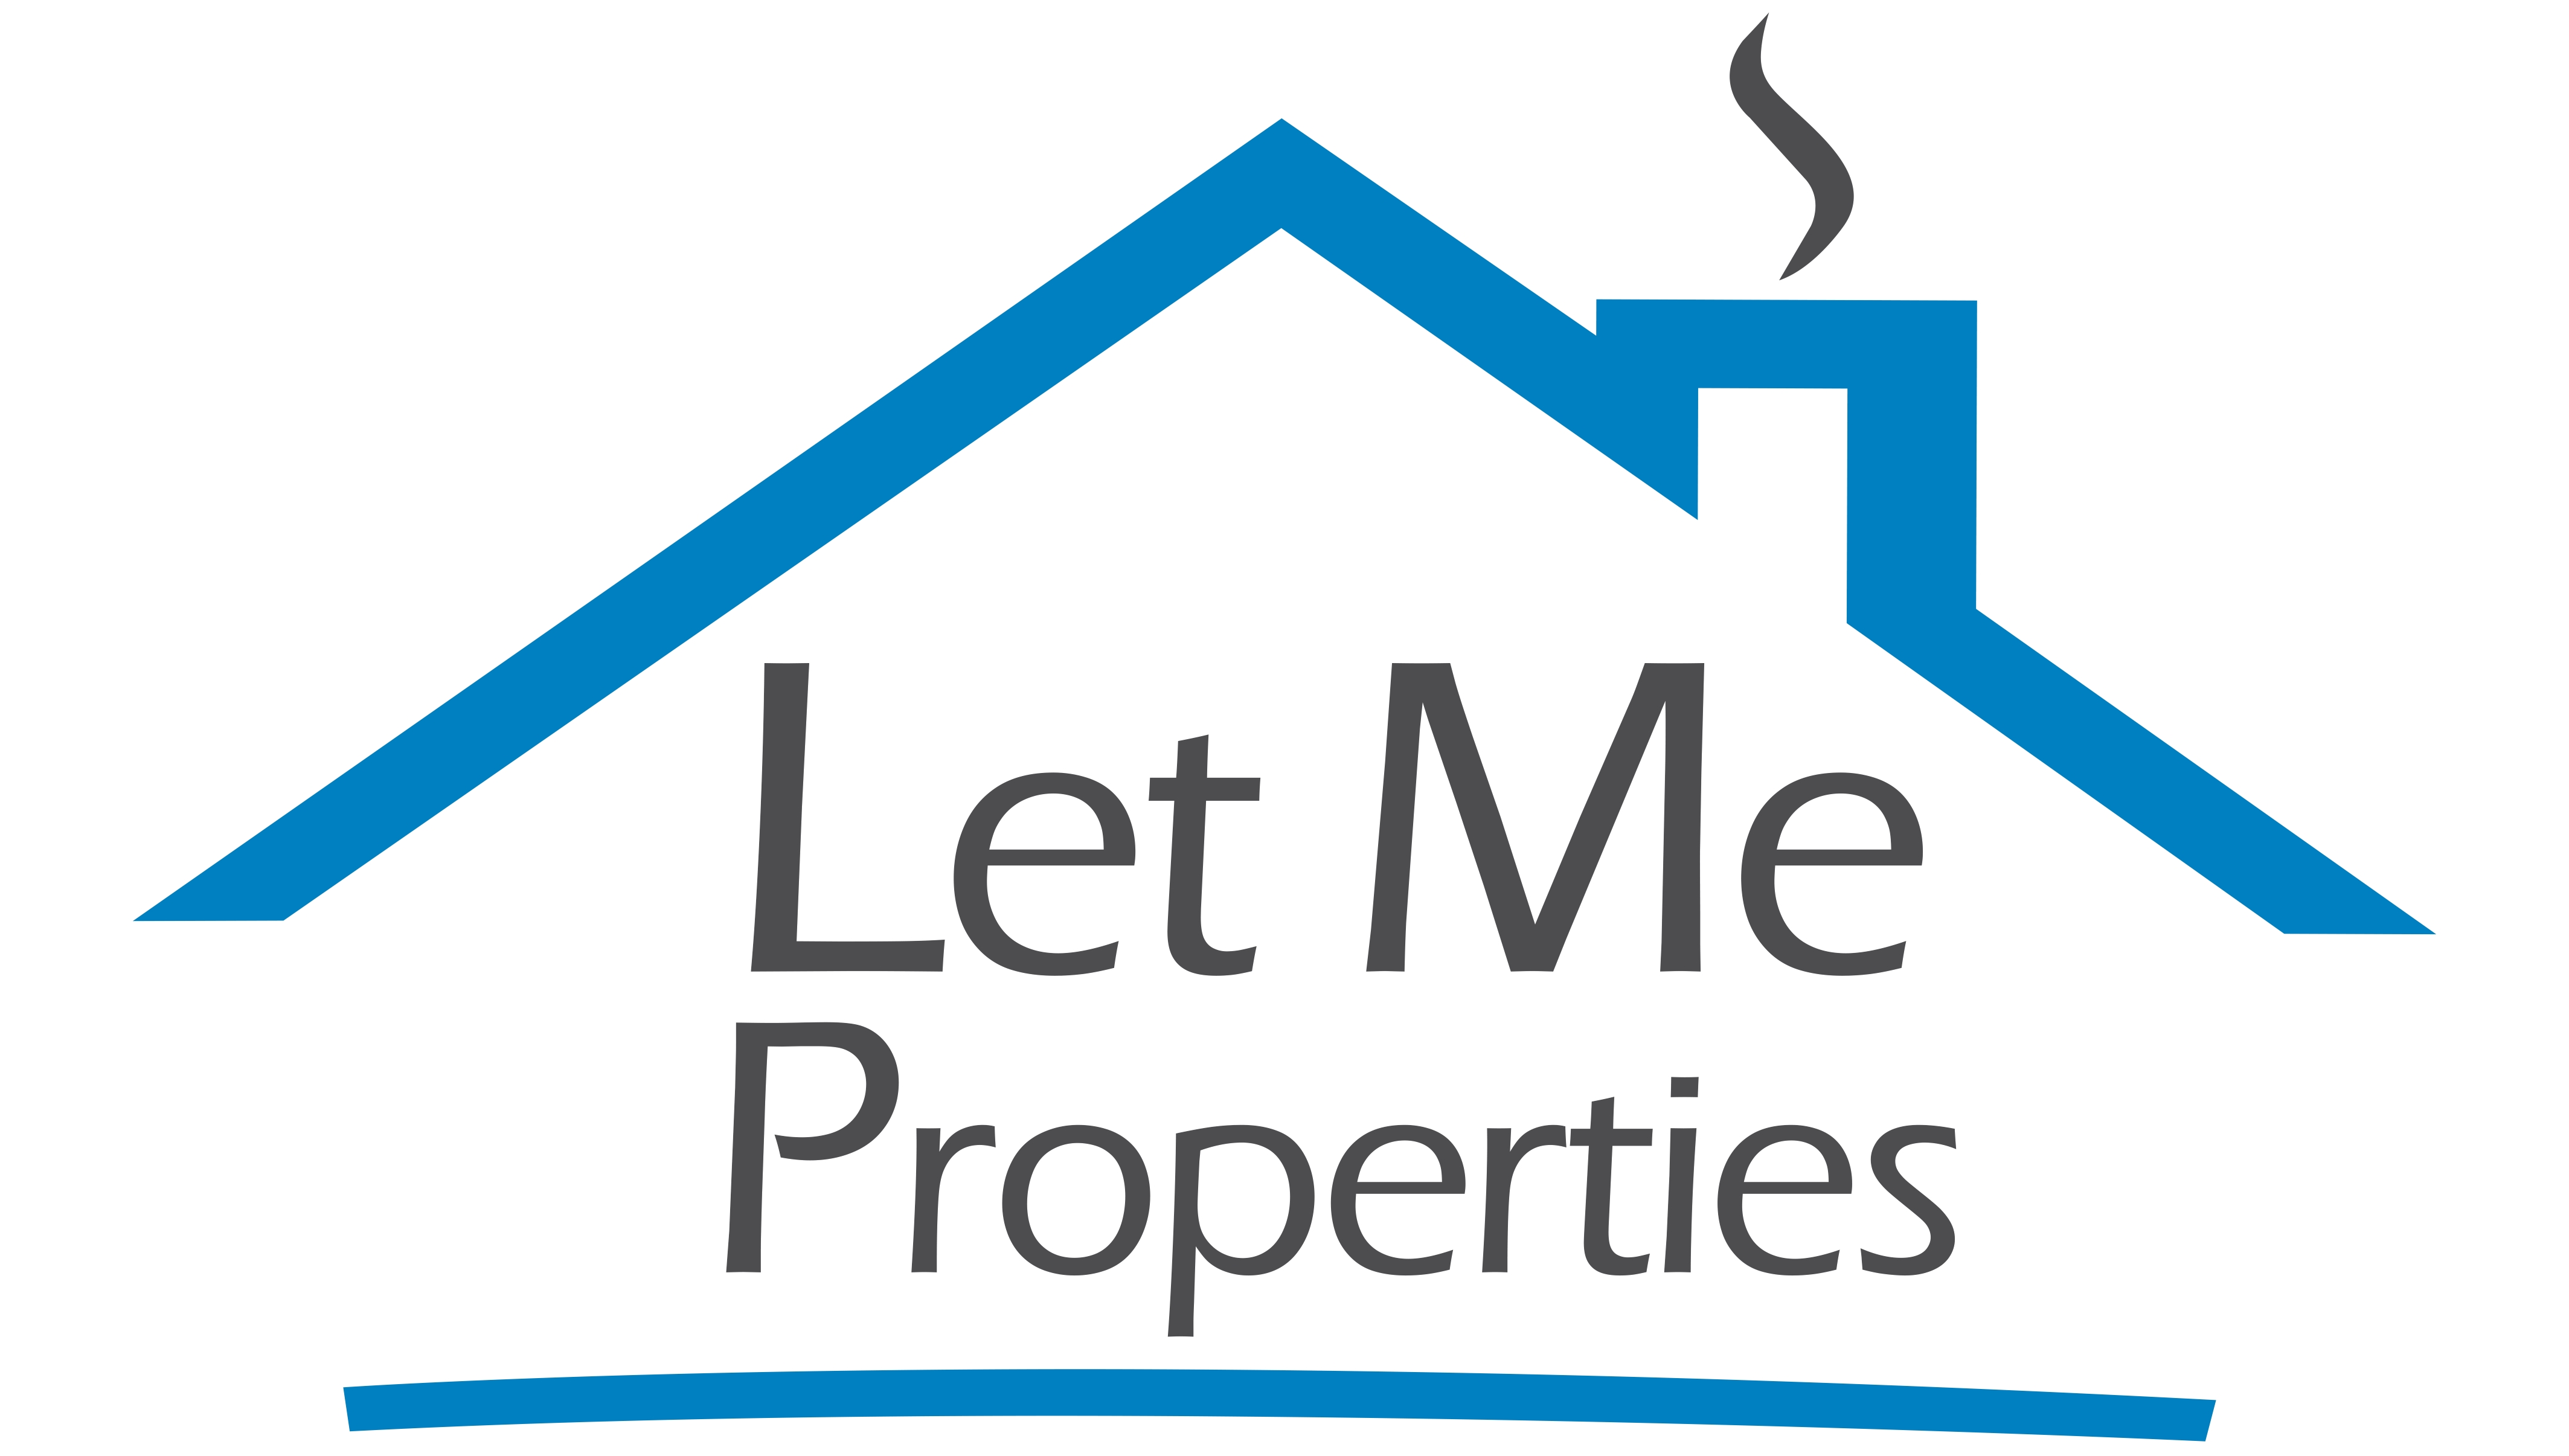 Let Me Properties : Letting agents in Radlett Hertfordshire